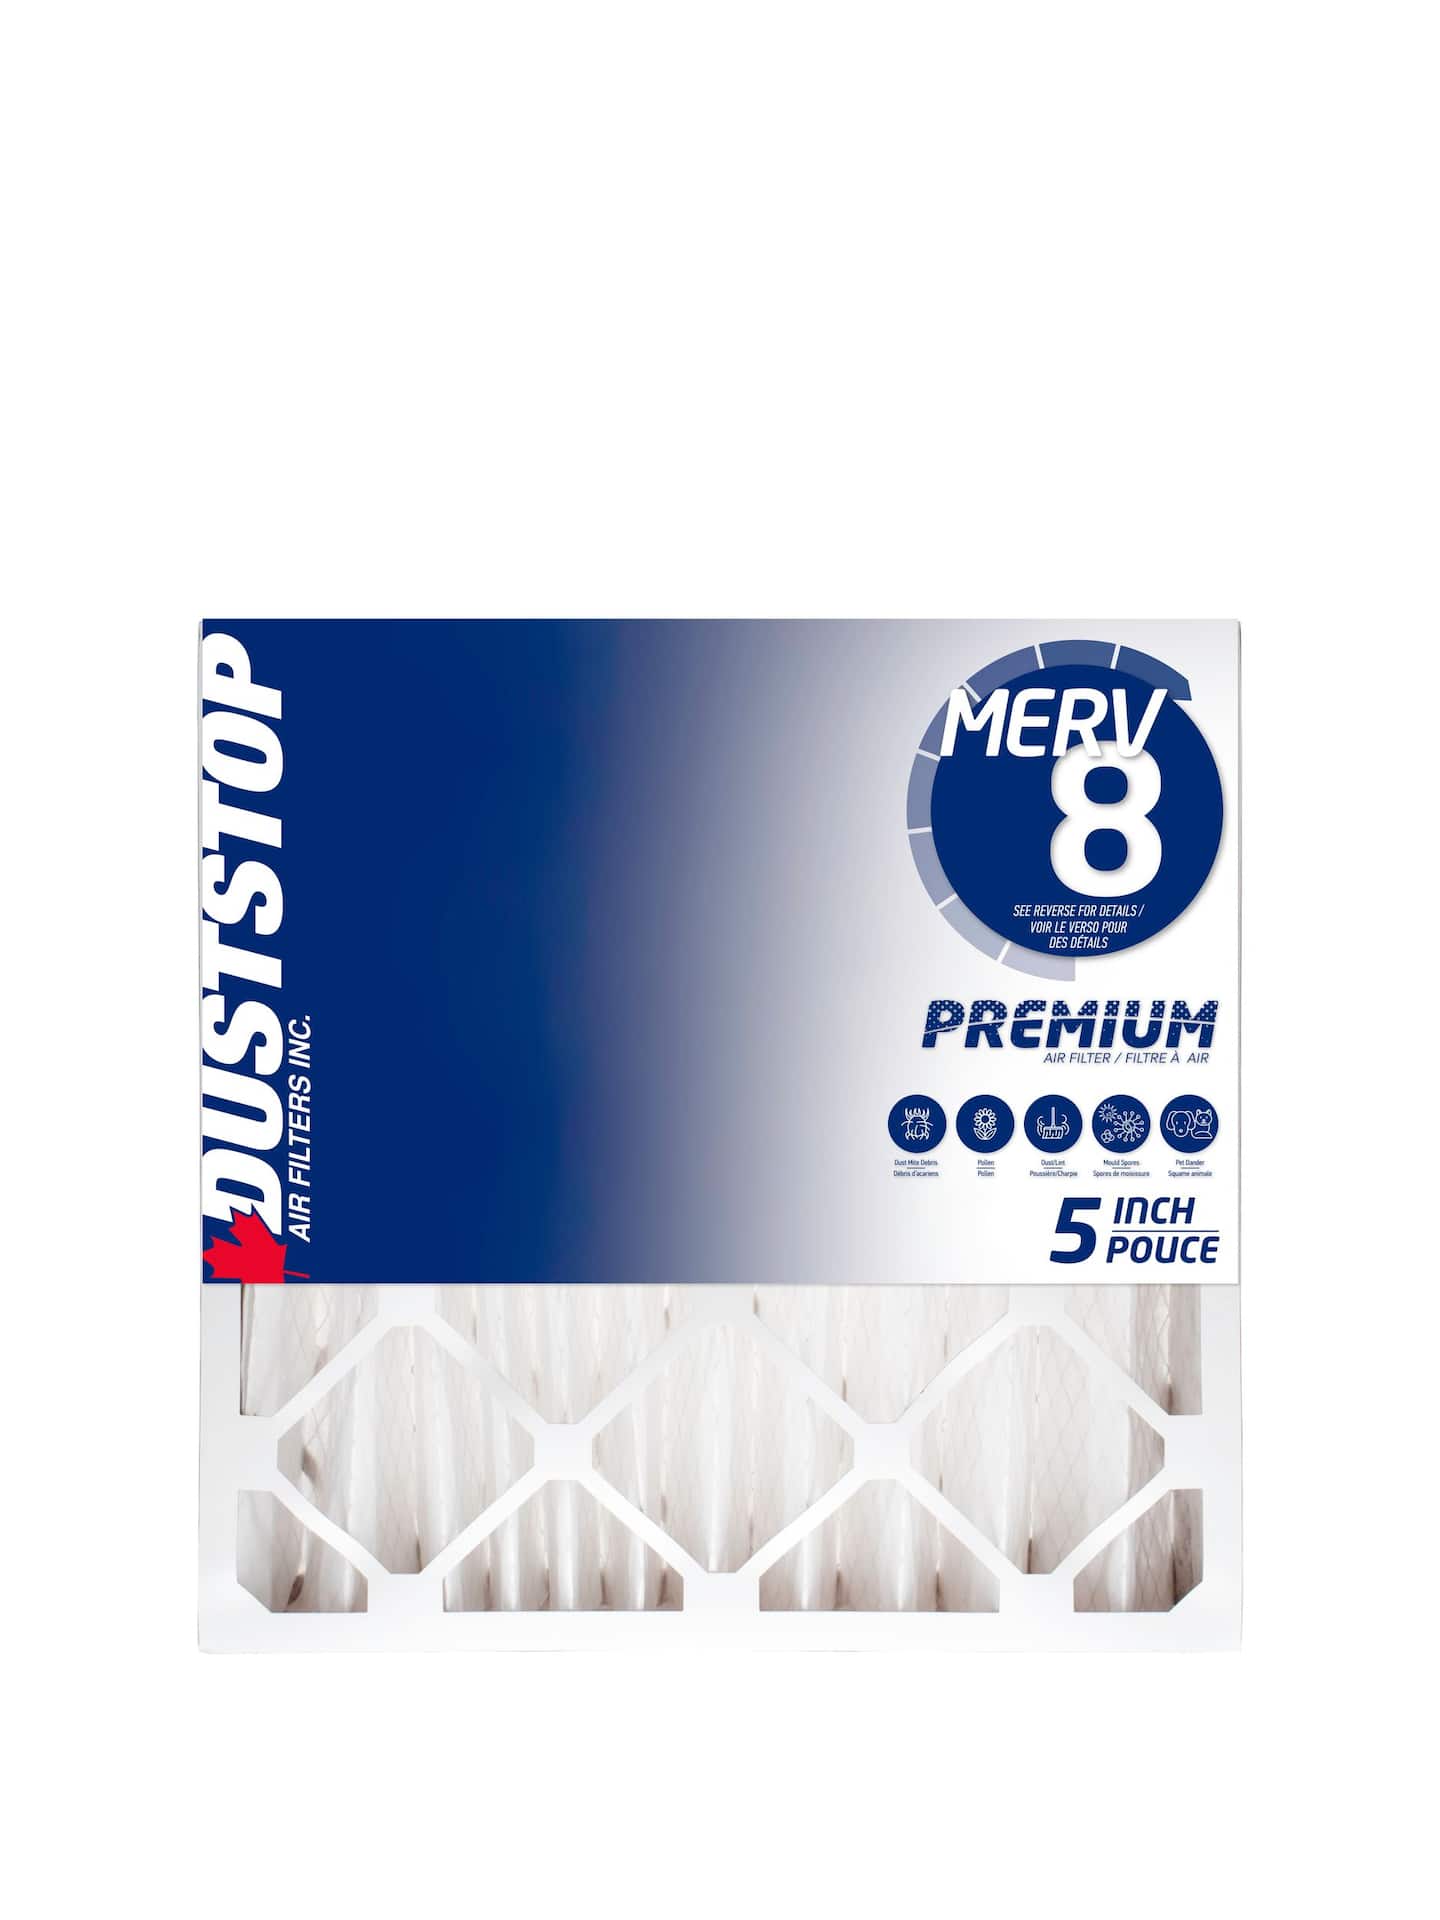 Duststop MERV 8 Premium Filter, 20-in x 20-in x 5-in | Canadian Tire